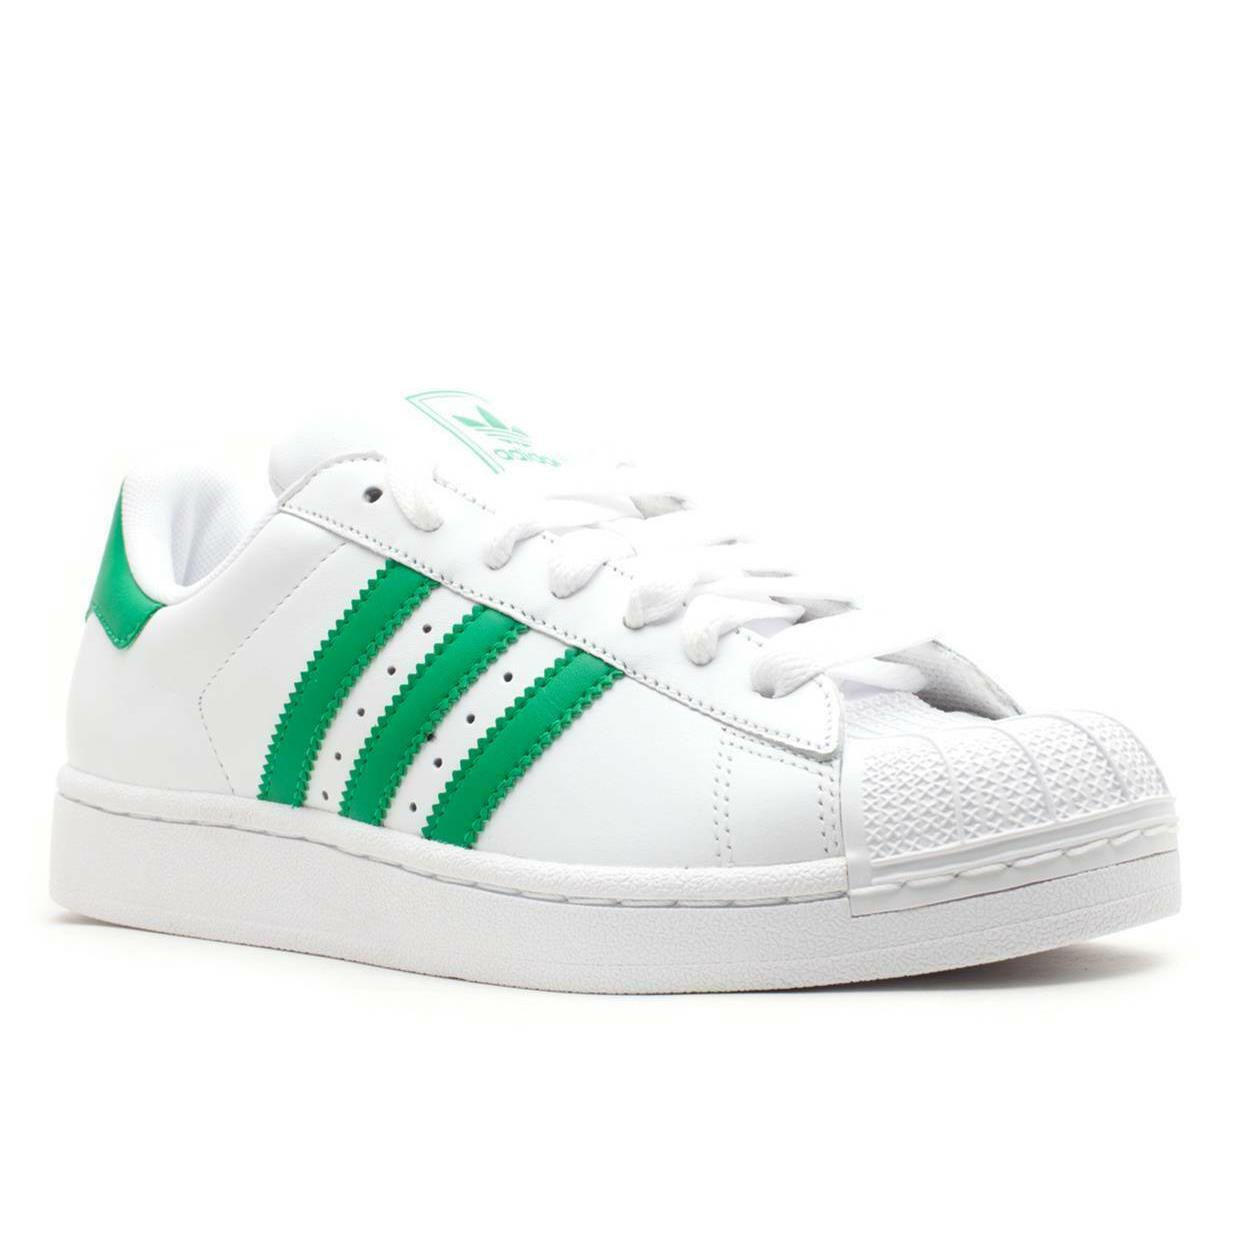 Adidas Originals Superstar Shoes G17069 White Fairway Green Shelltoe Shoes